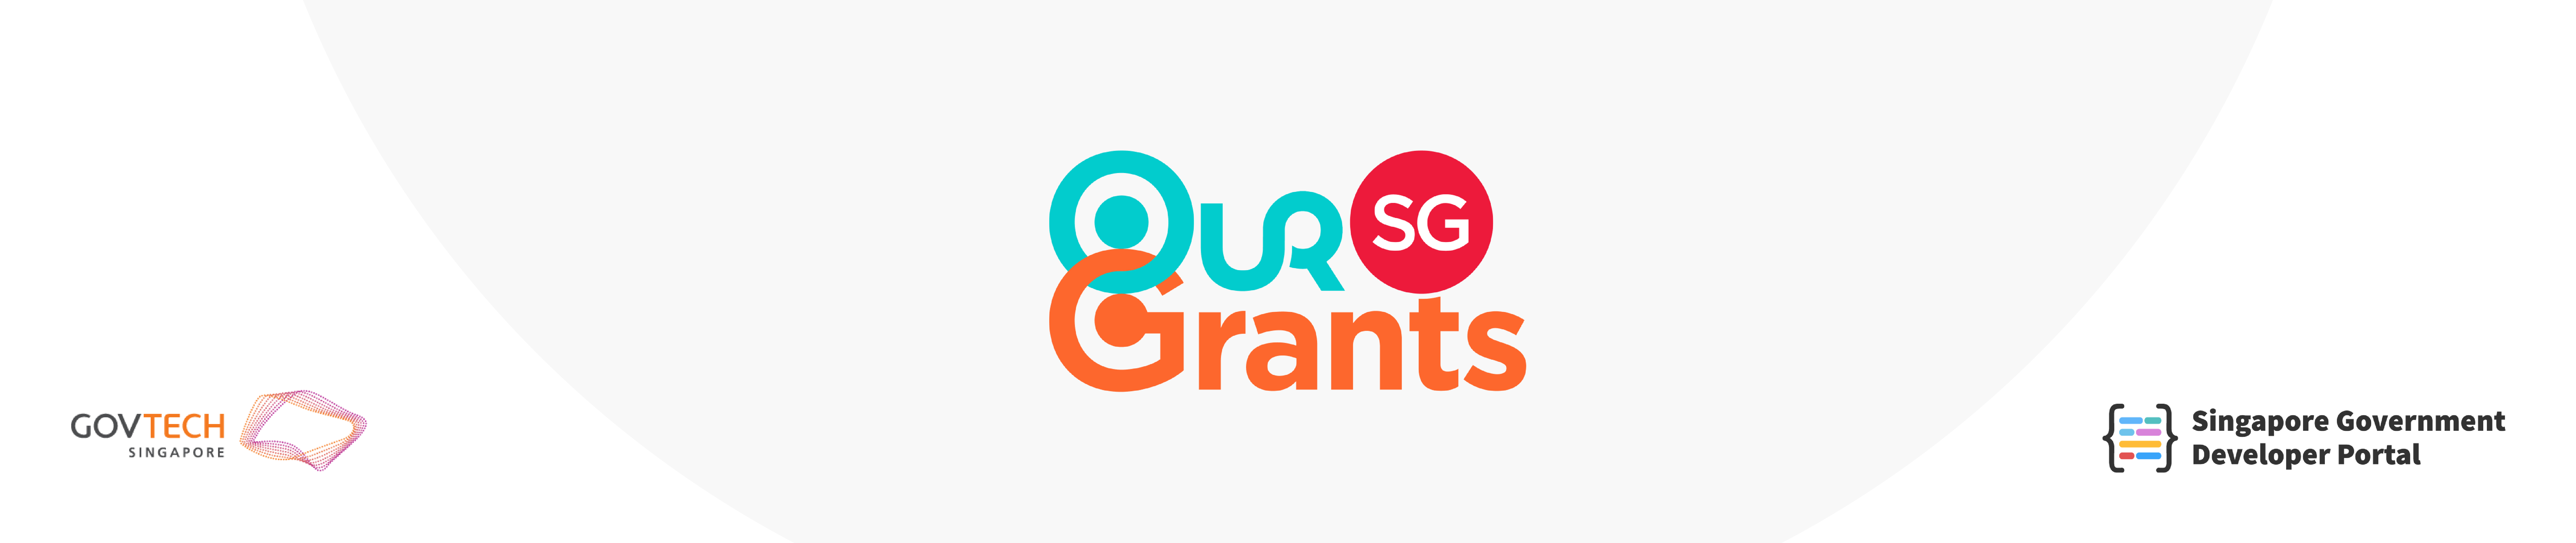 OurSG header banner for Singapore Governmeent Developer Portal